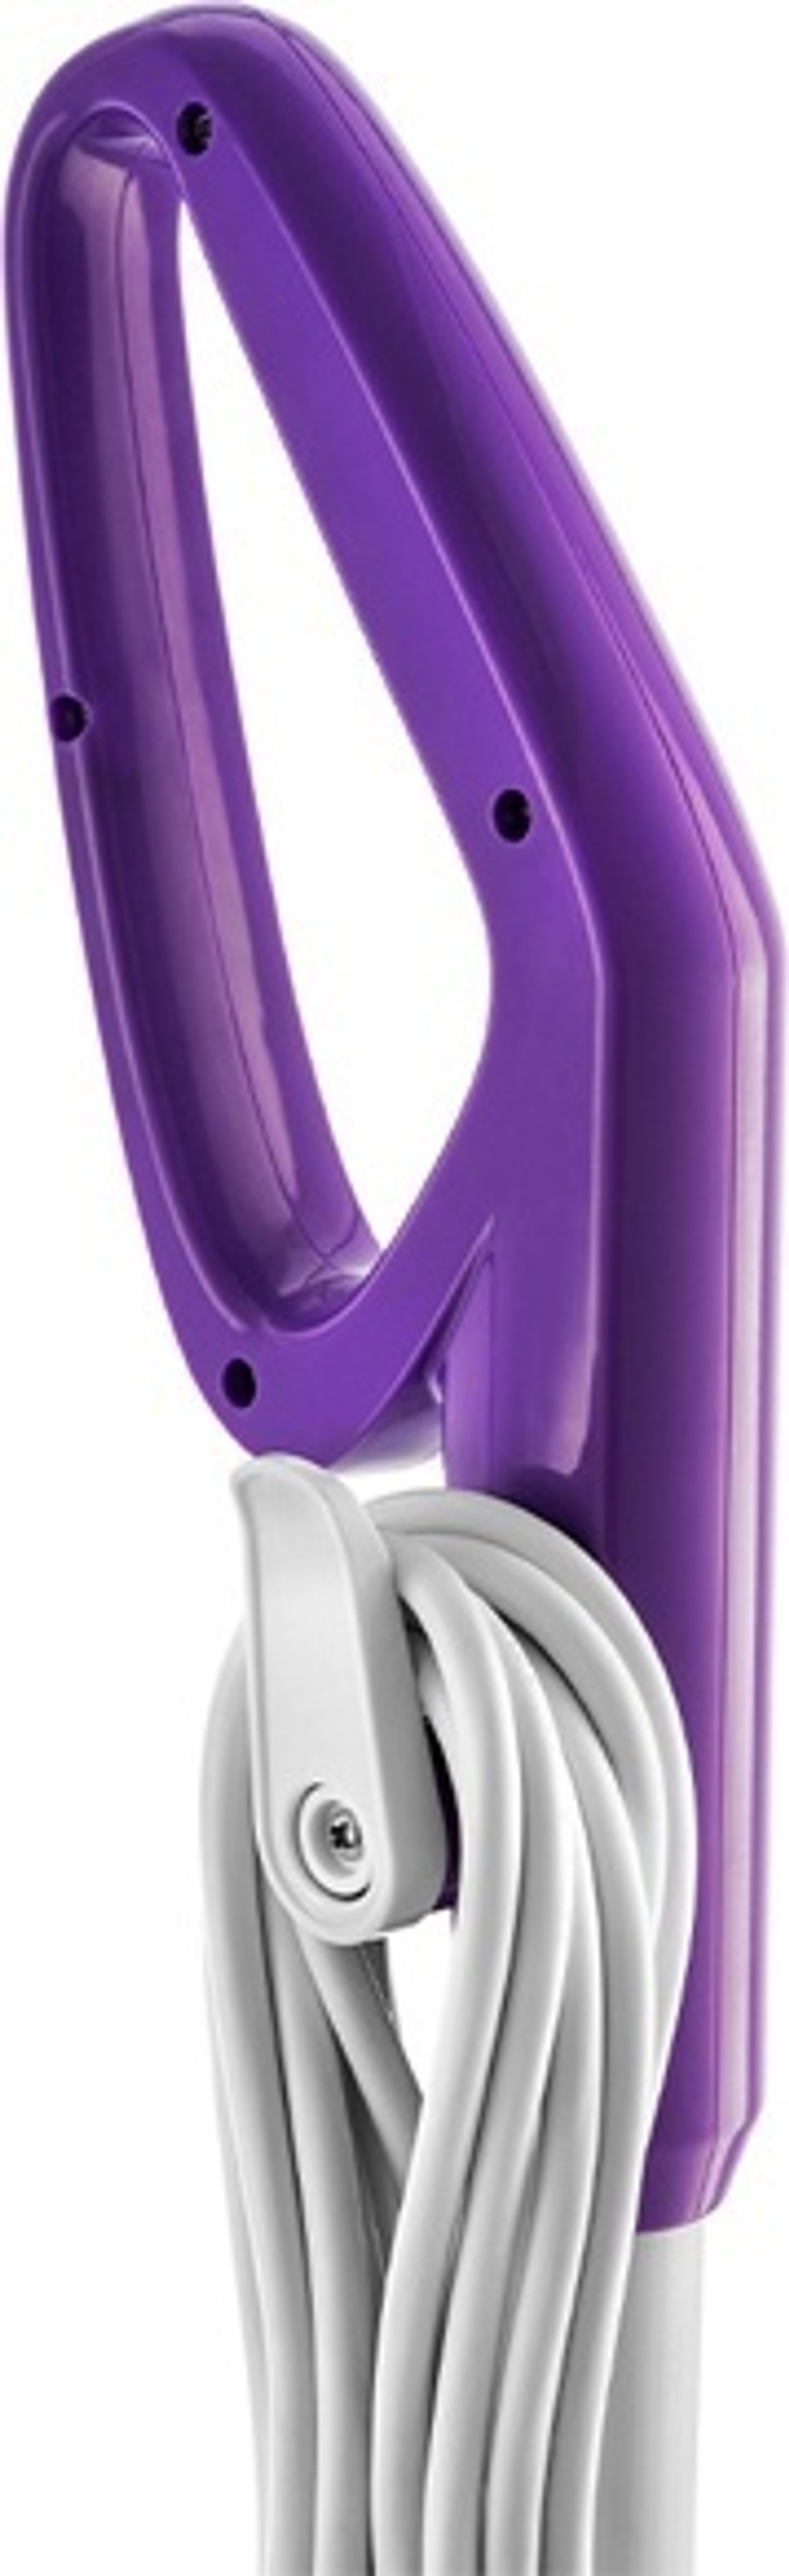 Kitfort швабра КТ-1004-4, фиолетовый